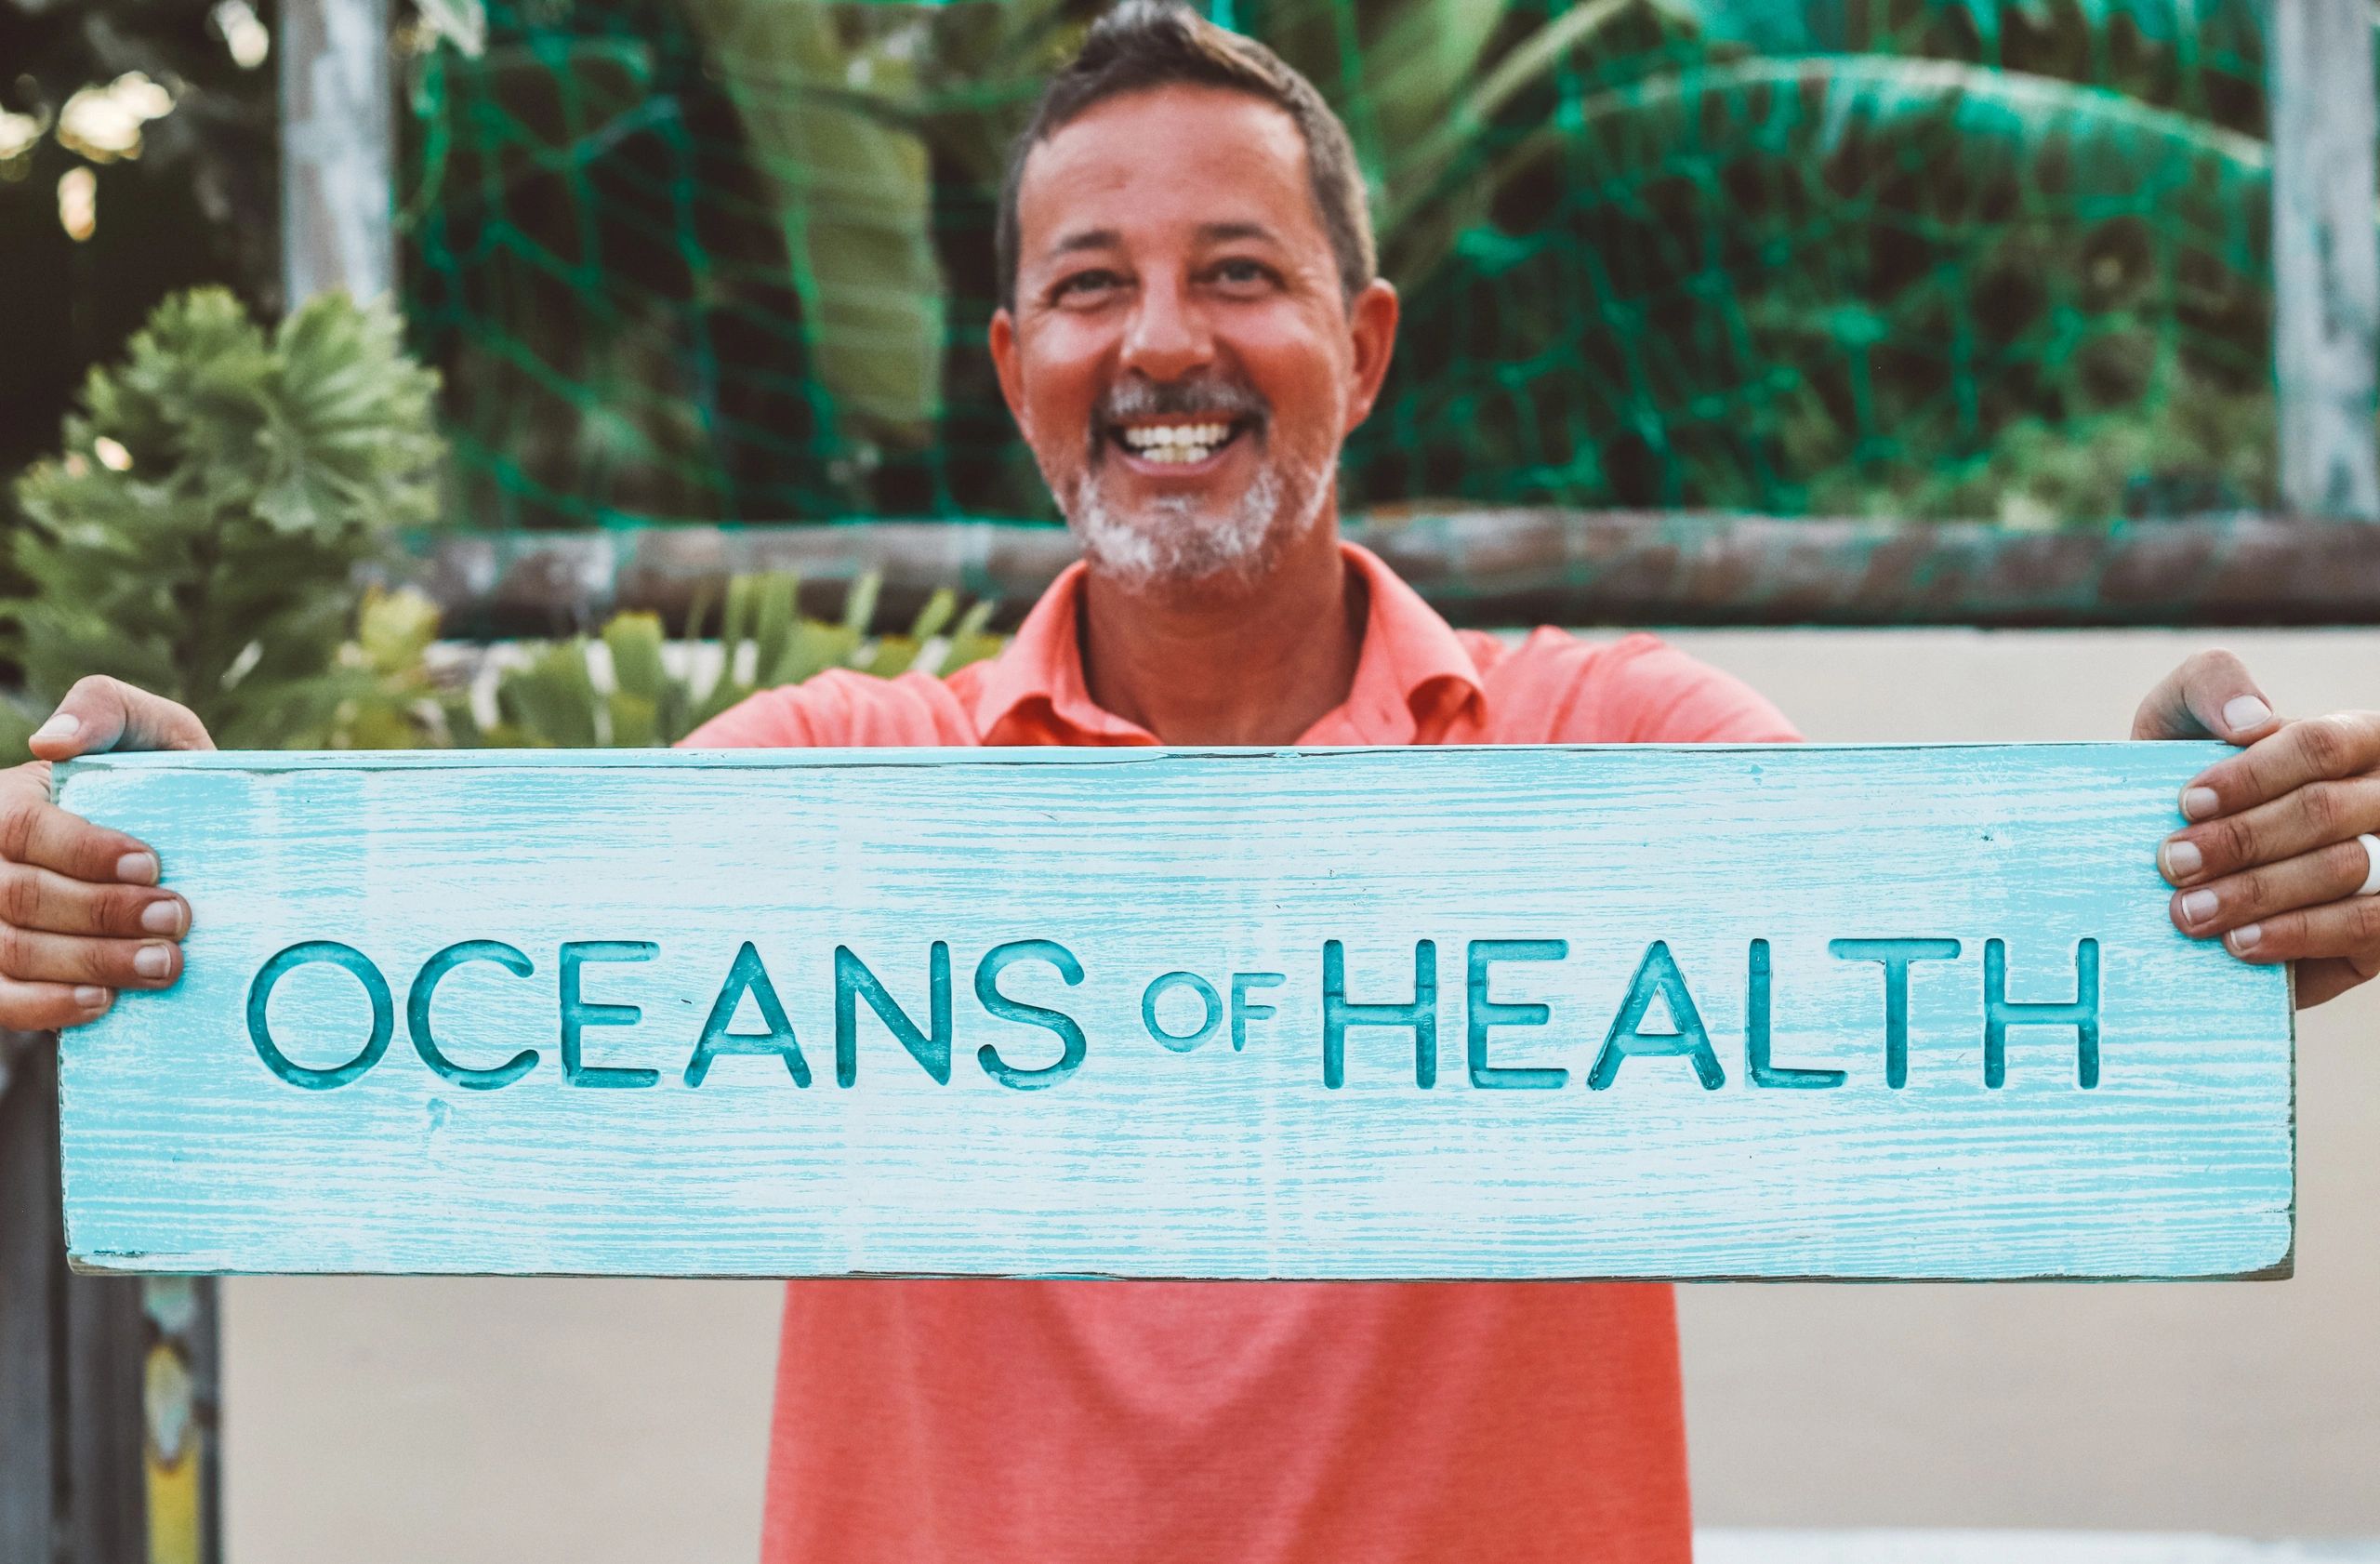 Oceans of Health image